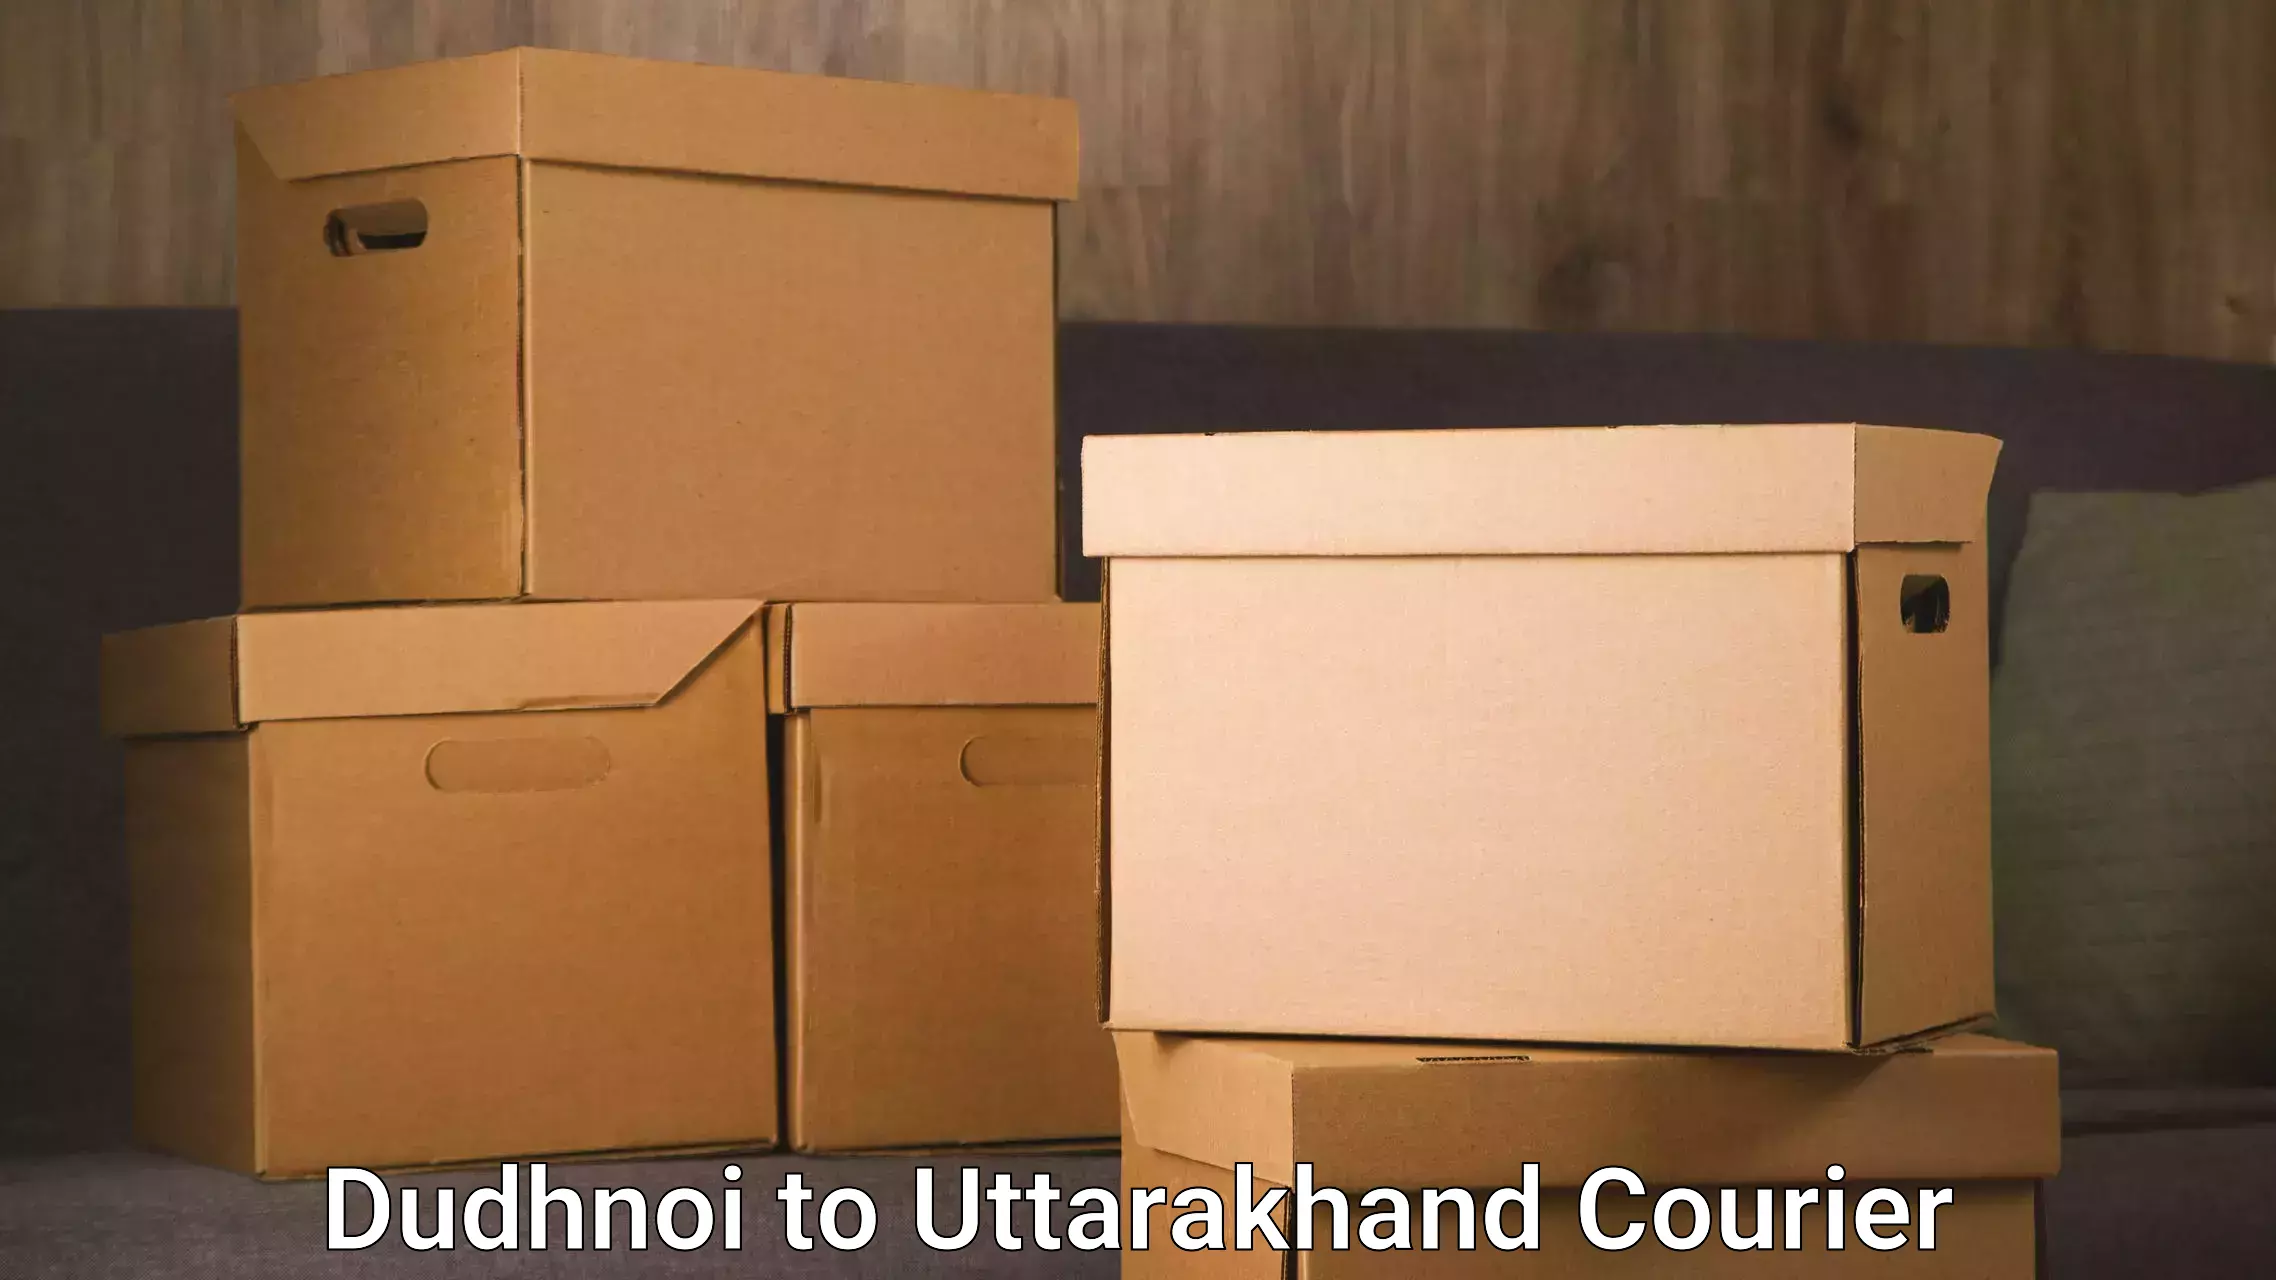 Professional courier handling Dudhnoi to Uttarakhand